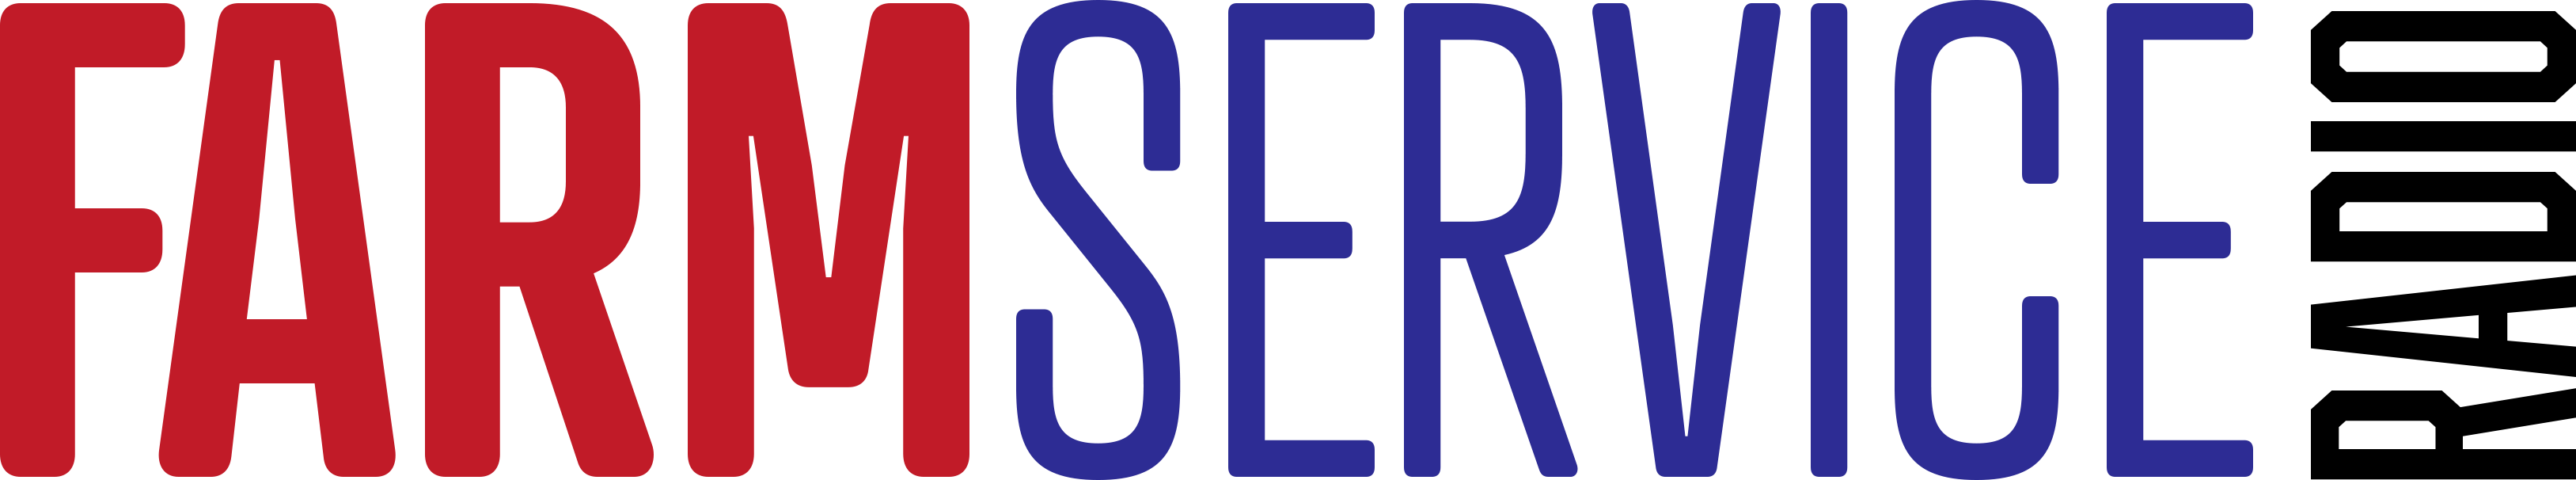 Farm Service Radio logo